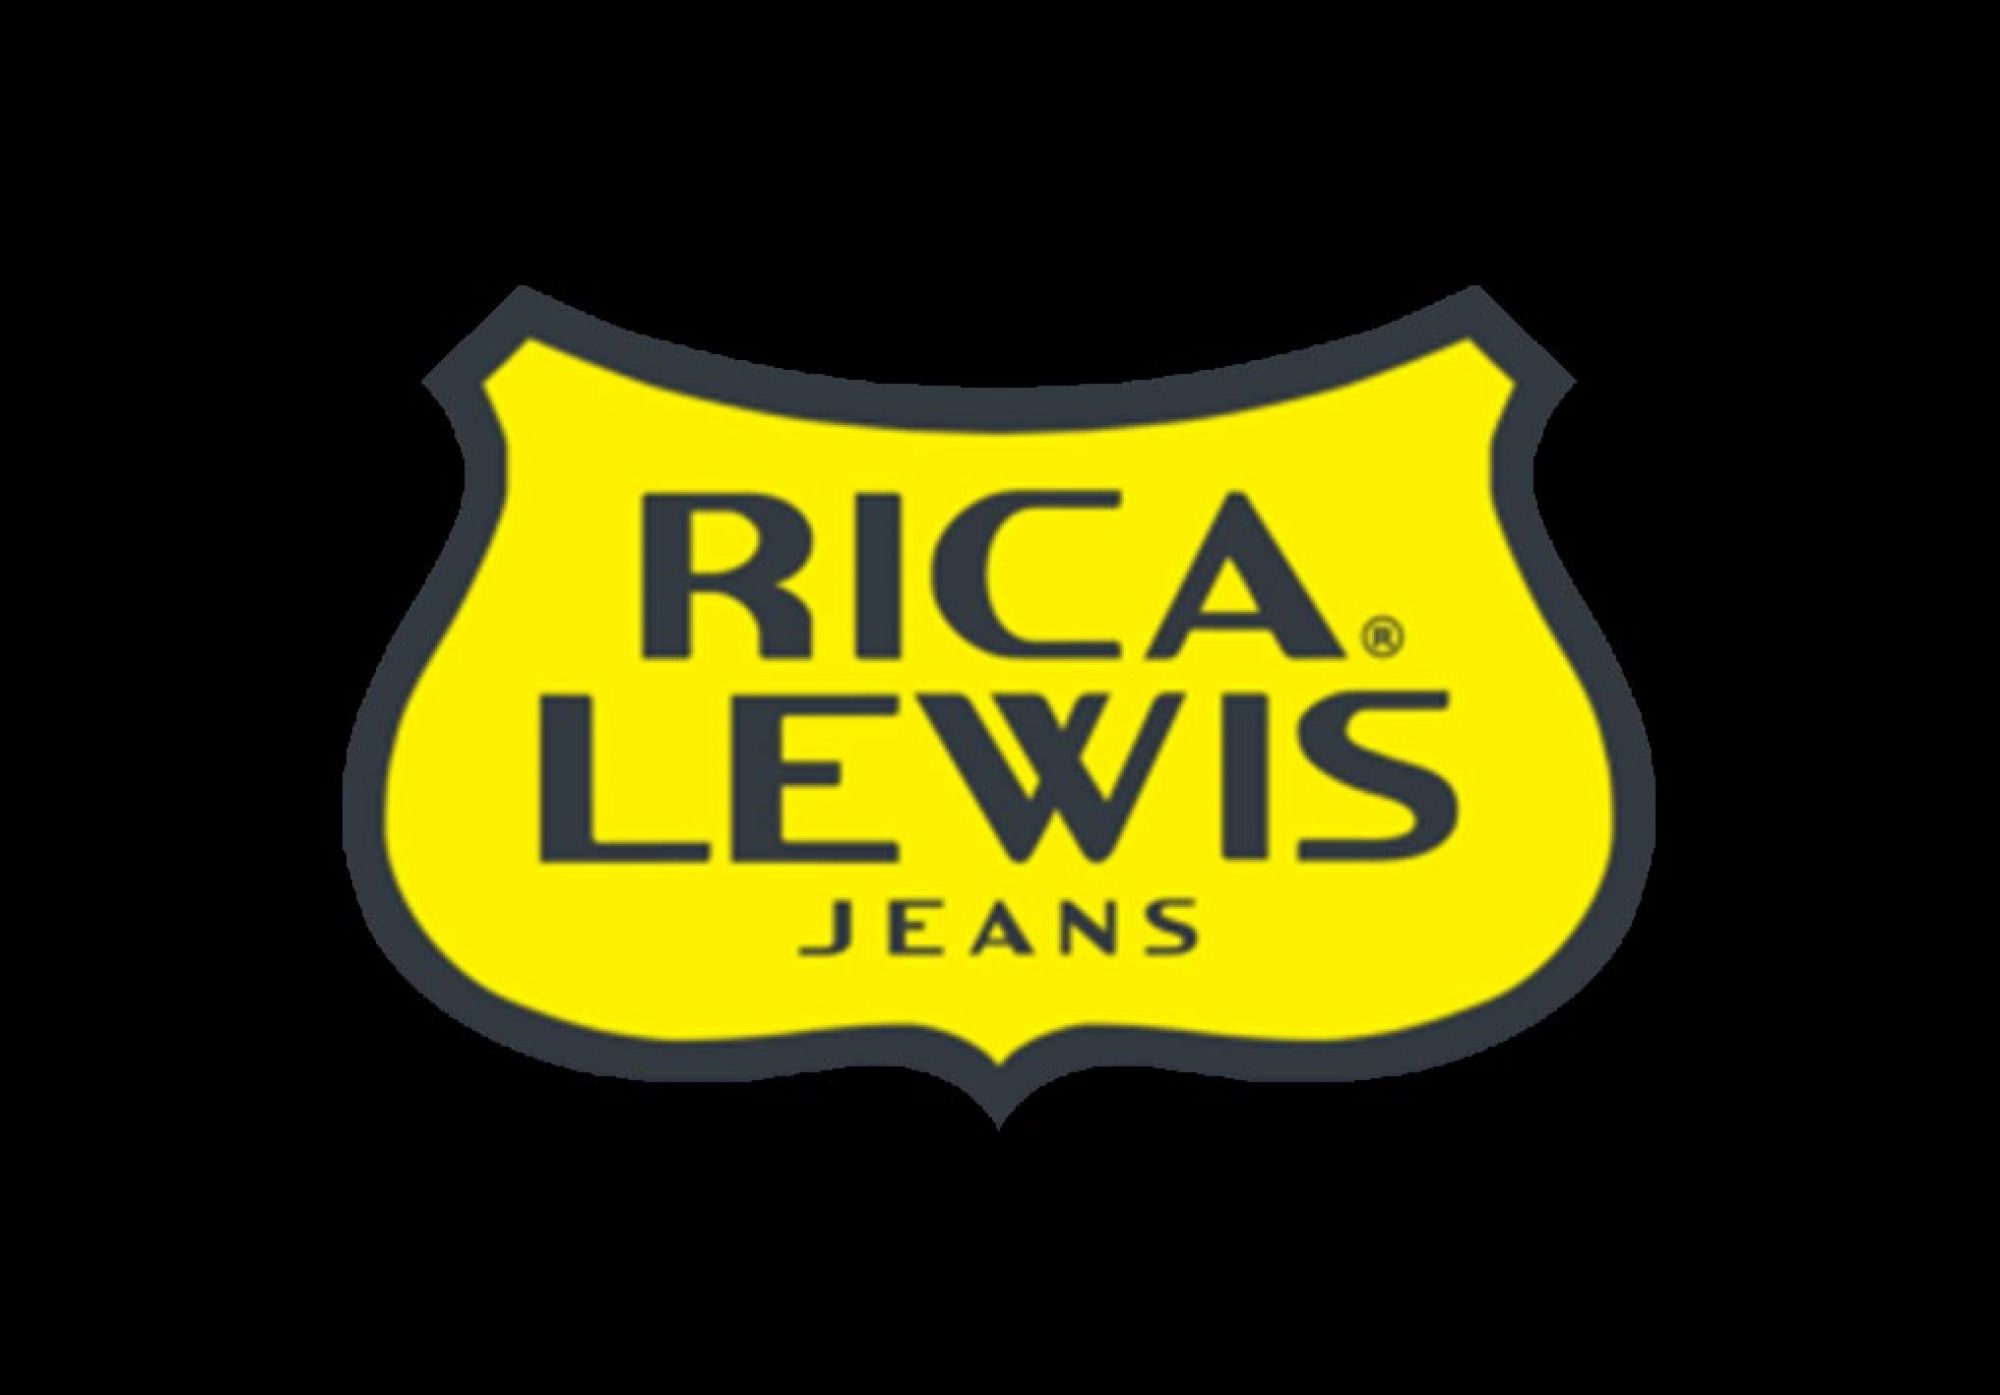 marque rica lewis jeans center